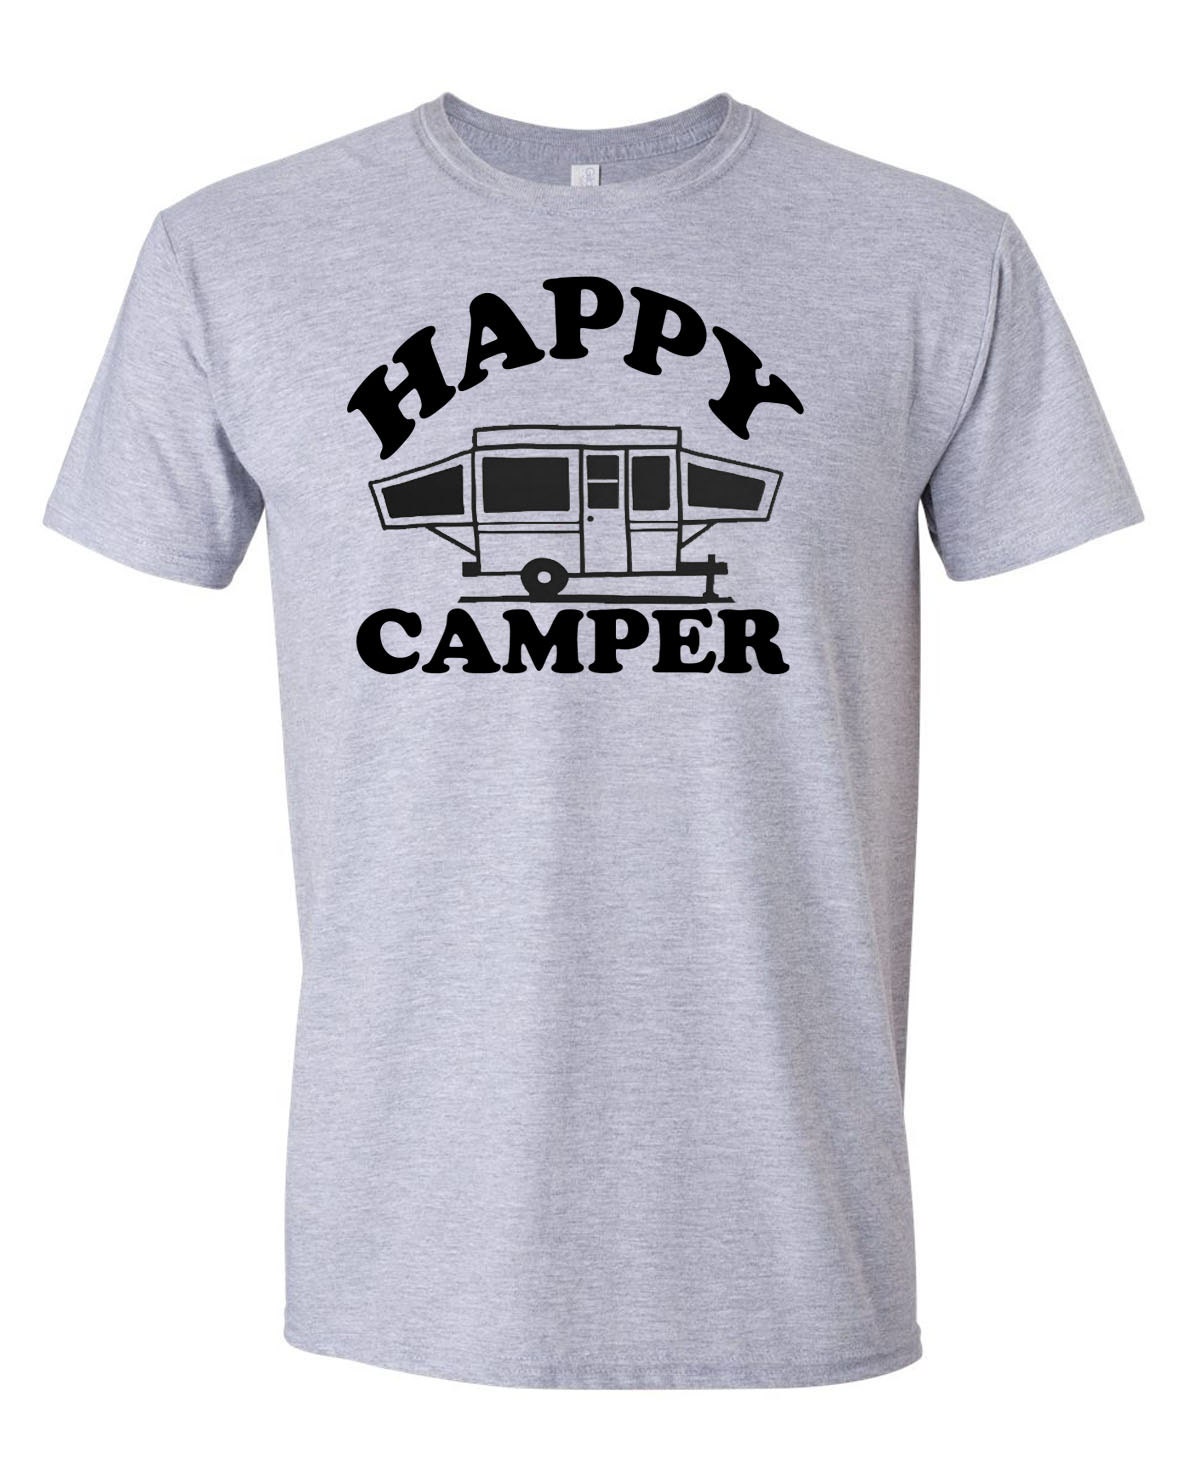 HAPPY CAMPER T-shirt w. Pop-Up Camper